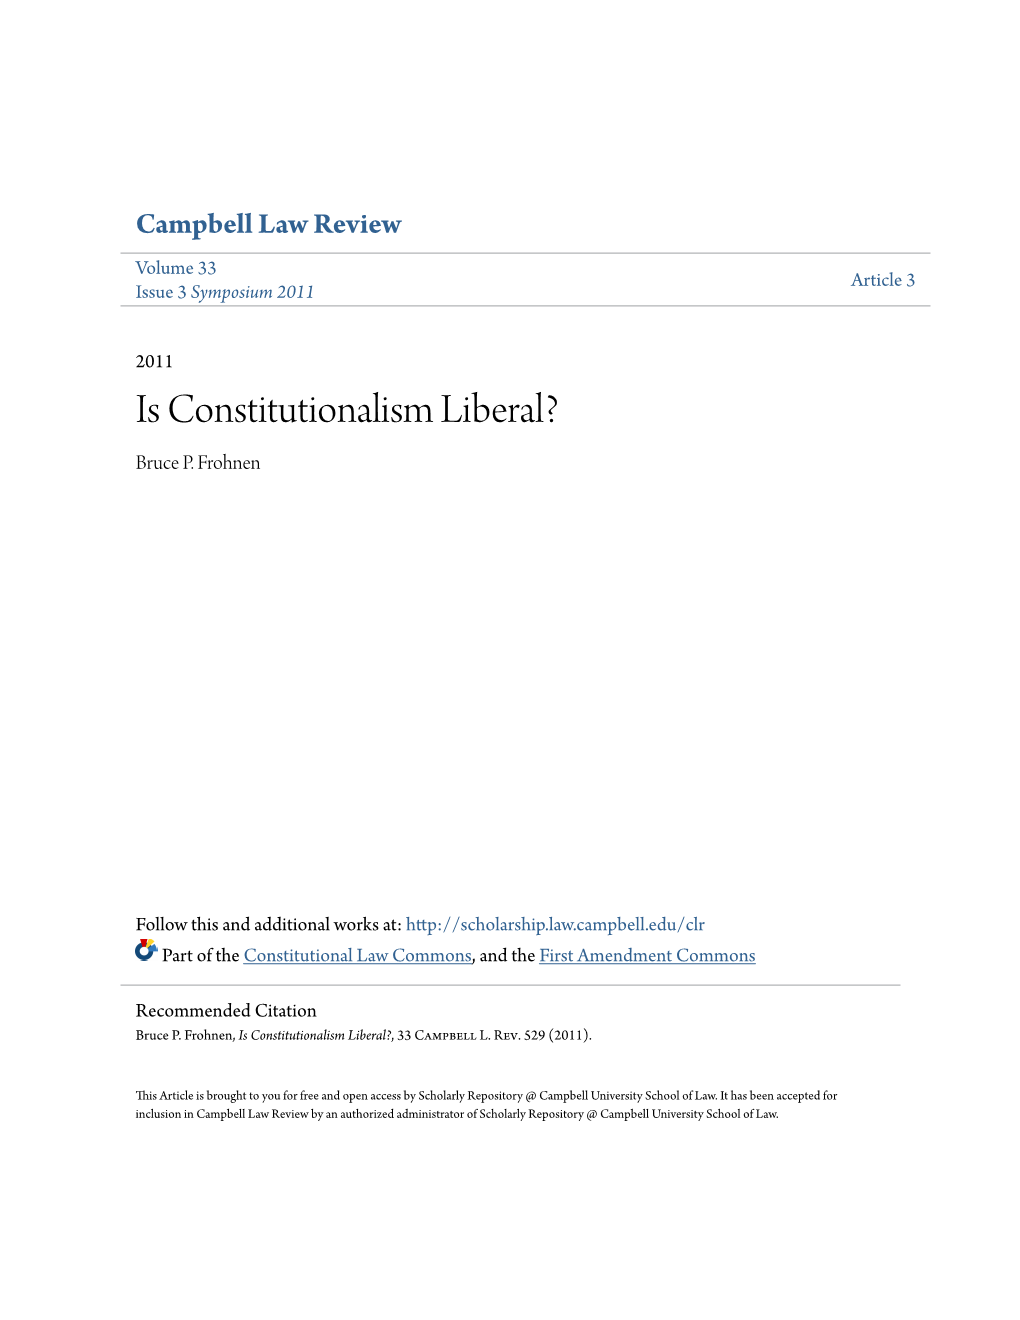 Is Constitutionalism Liberal? Bruce P